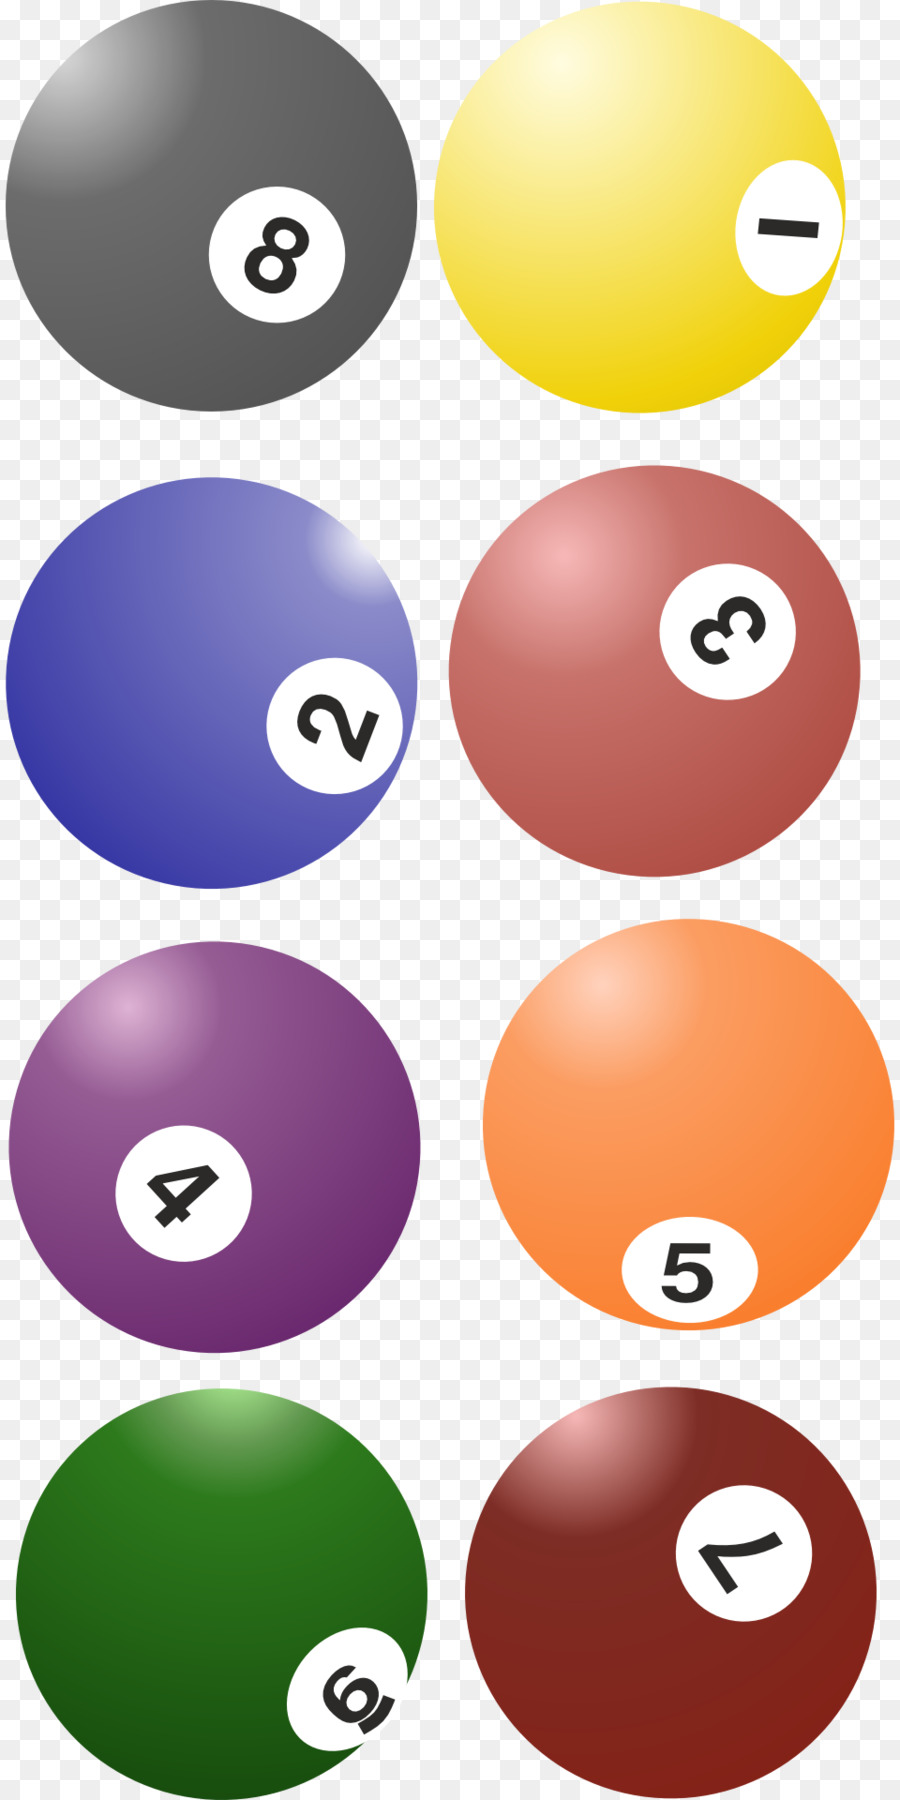 Billard-ball-Billard-Acht-ball - Vier-Farben-Billard